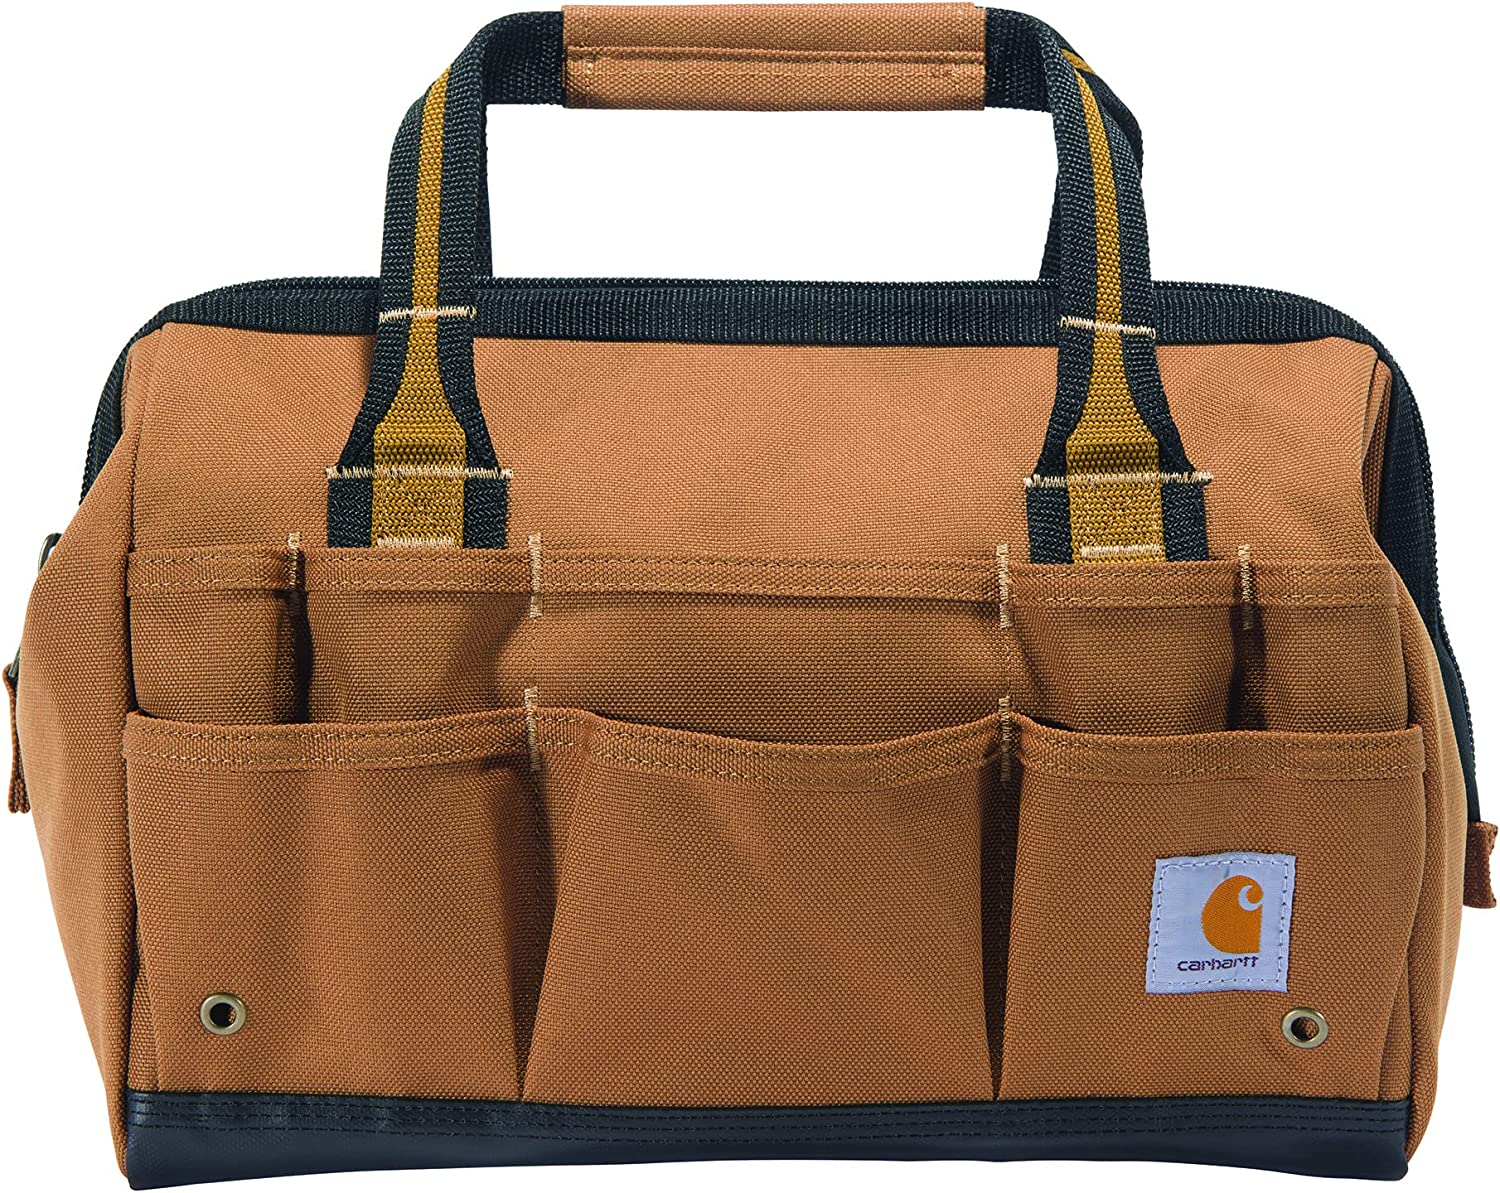 Carhartt's Legacy 14" Tool Bag